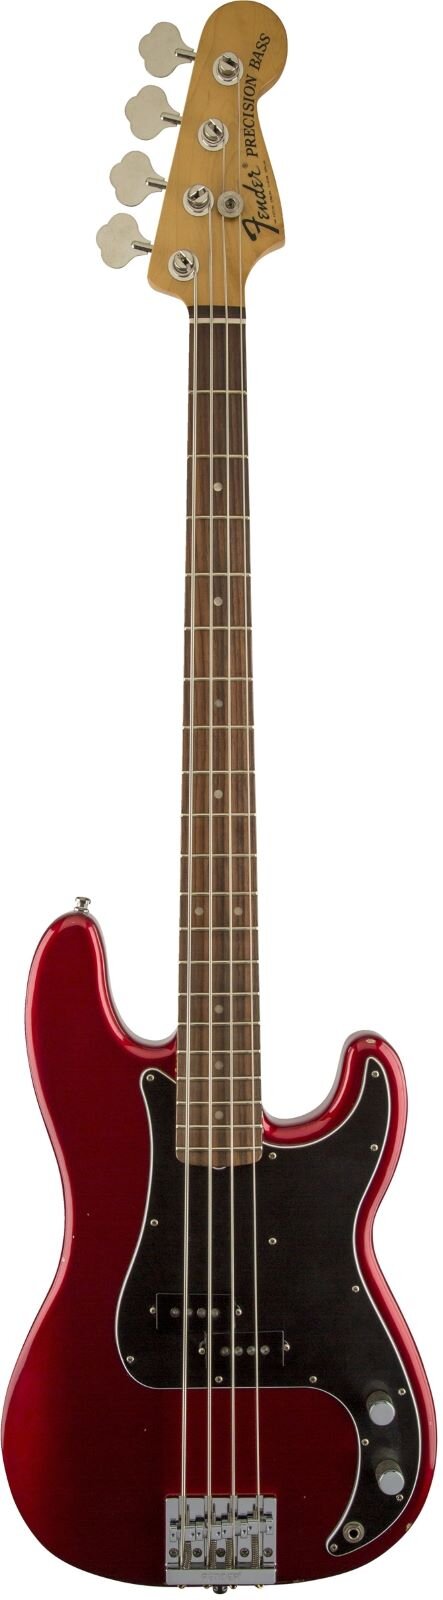 Fender Nate Mendel P Bass Rosewood Griffbrett Candy Apple Red : photo 1